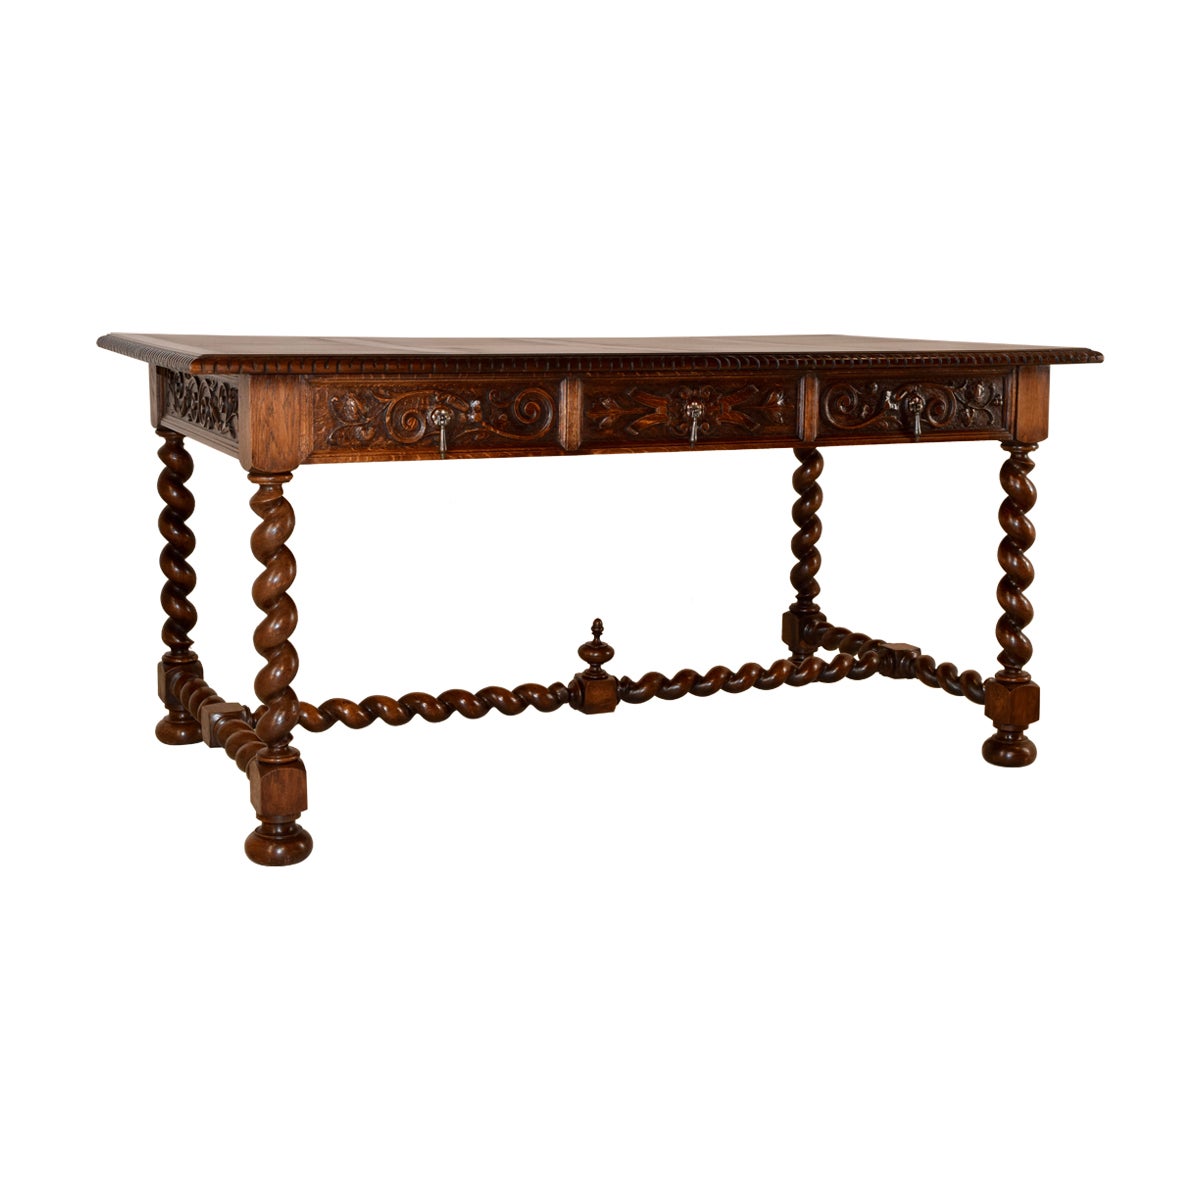 19th Century French Oak Desk